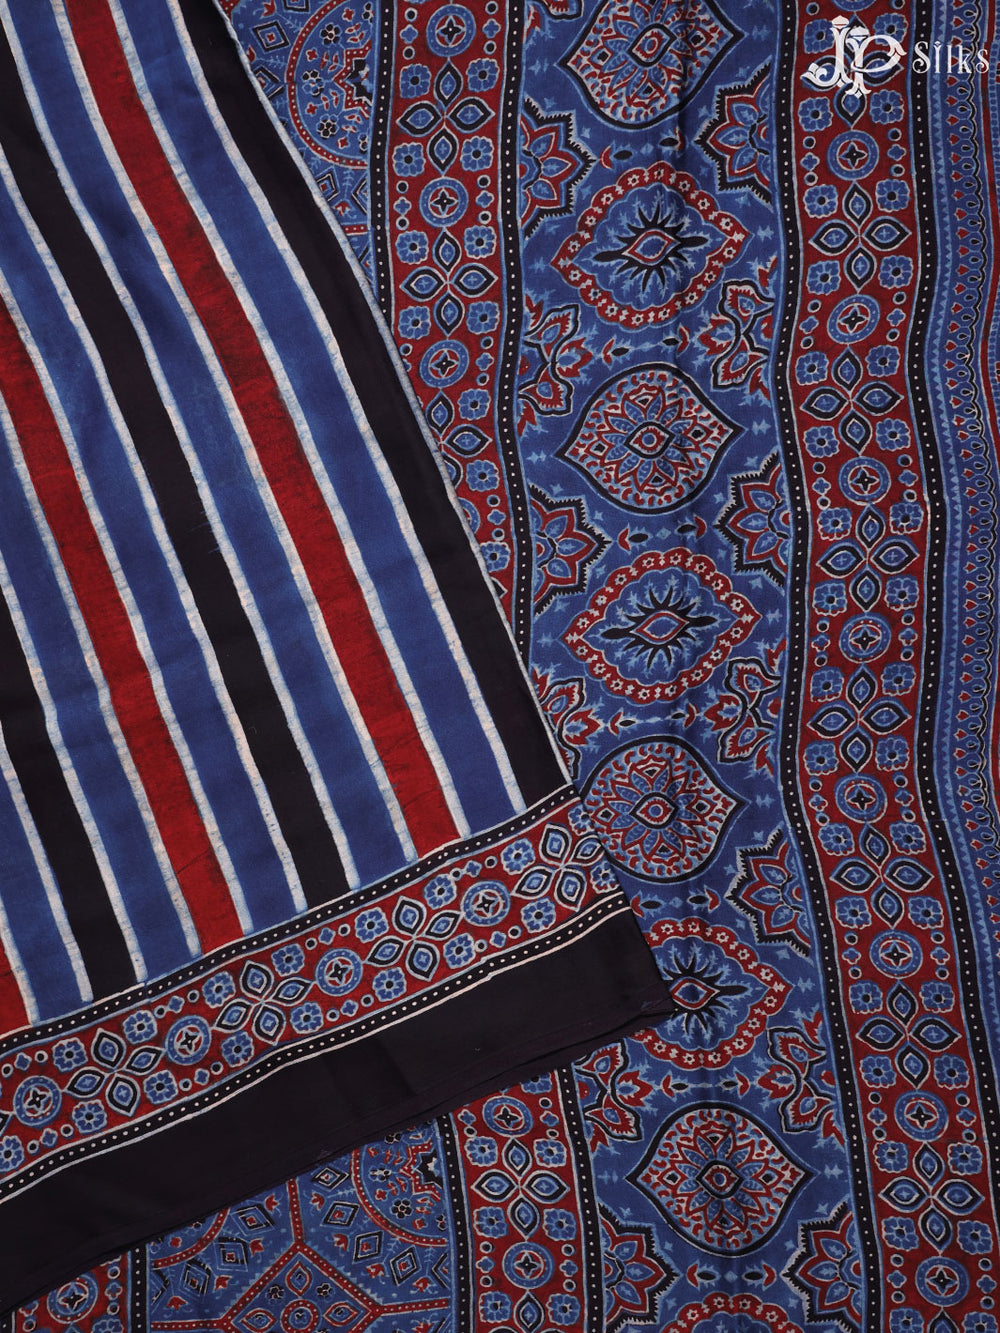 Indigo Blue, Maroon and Black Ajrakh Modal Silk Fancy Saree - E5049 - View 1